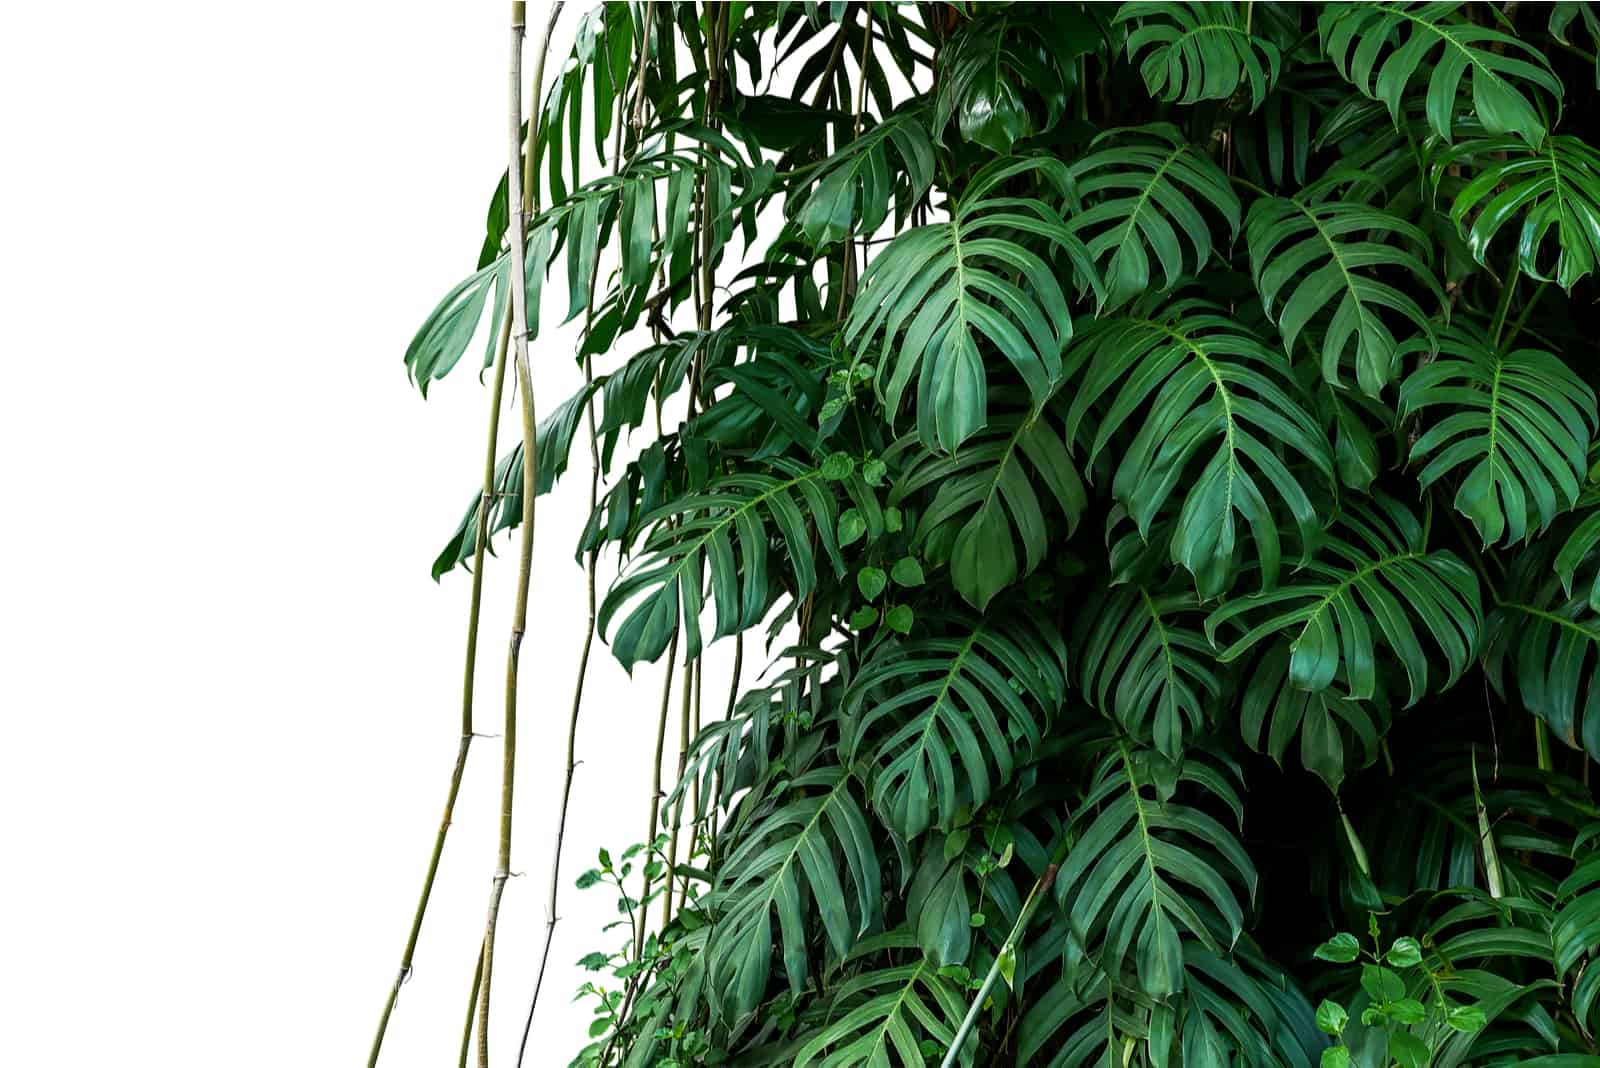  liana plant growing in wild climbing on jungle tree